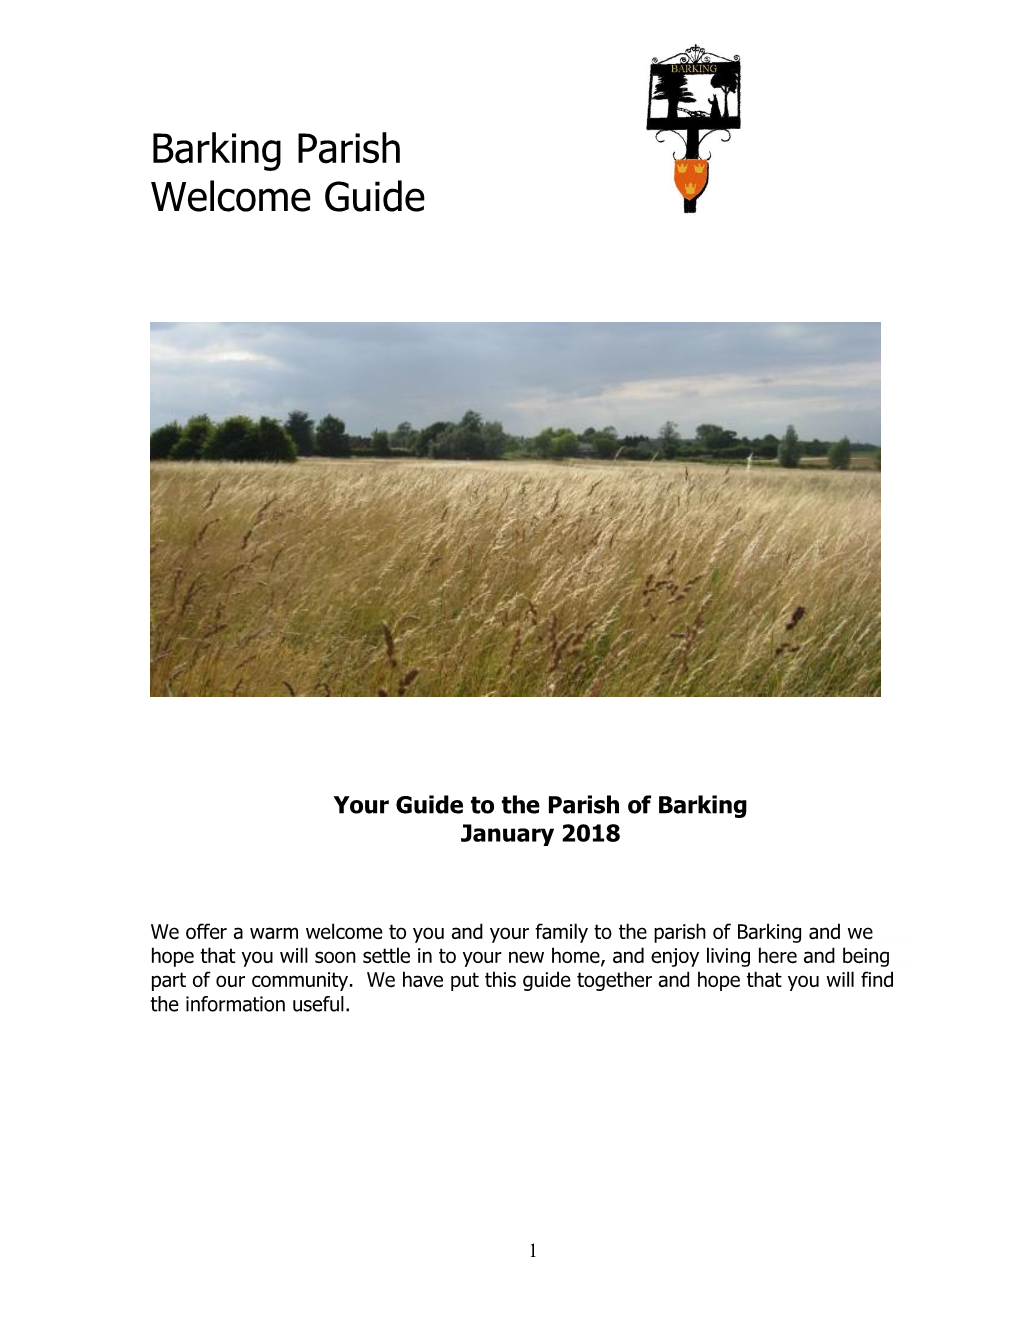 Barking Parish Welcome Guide